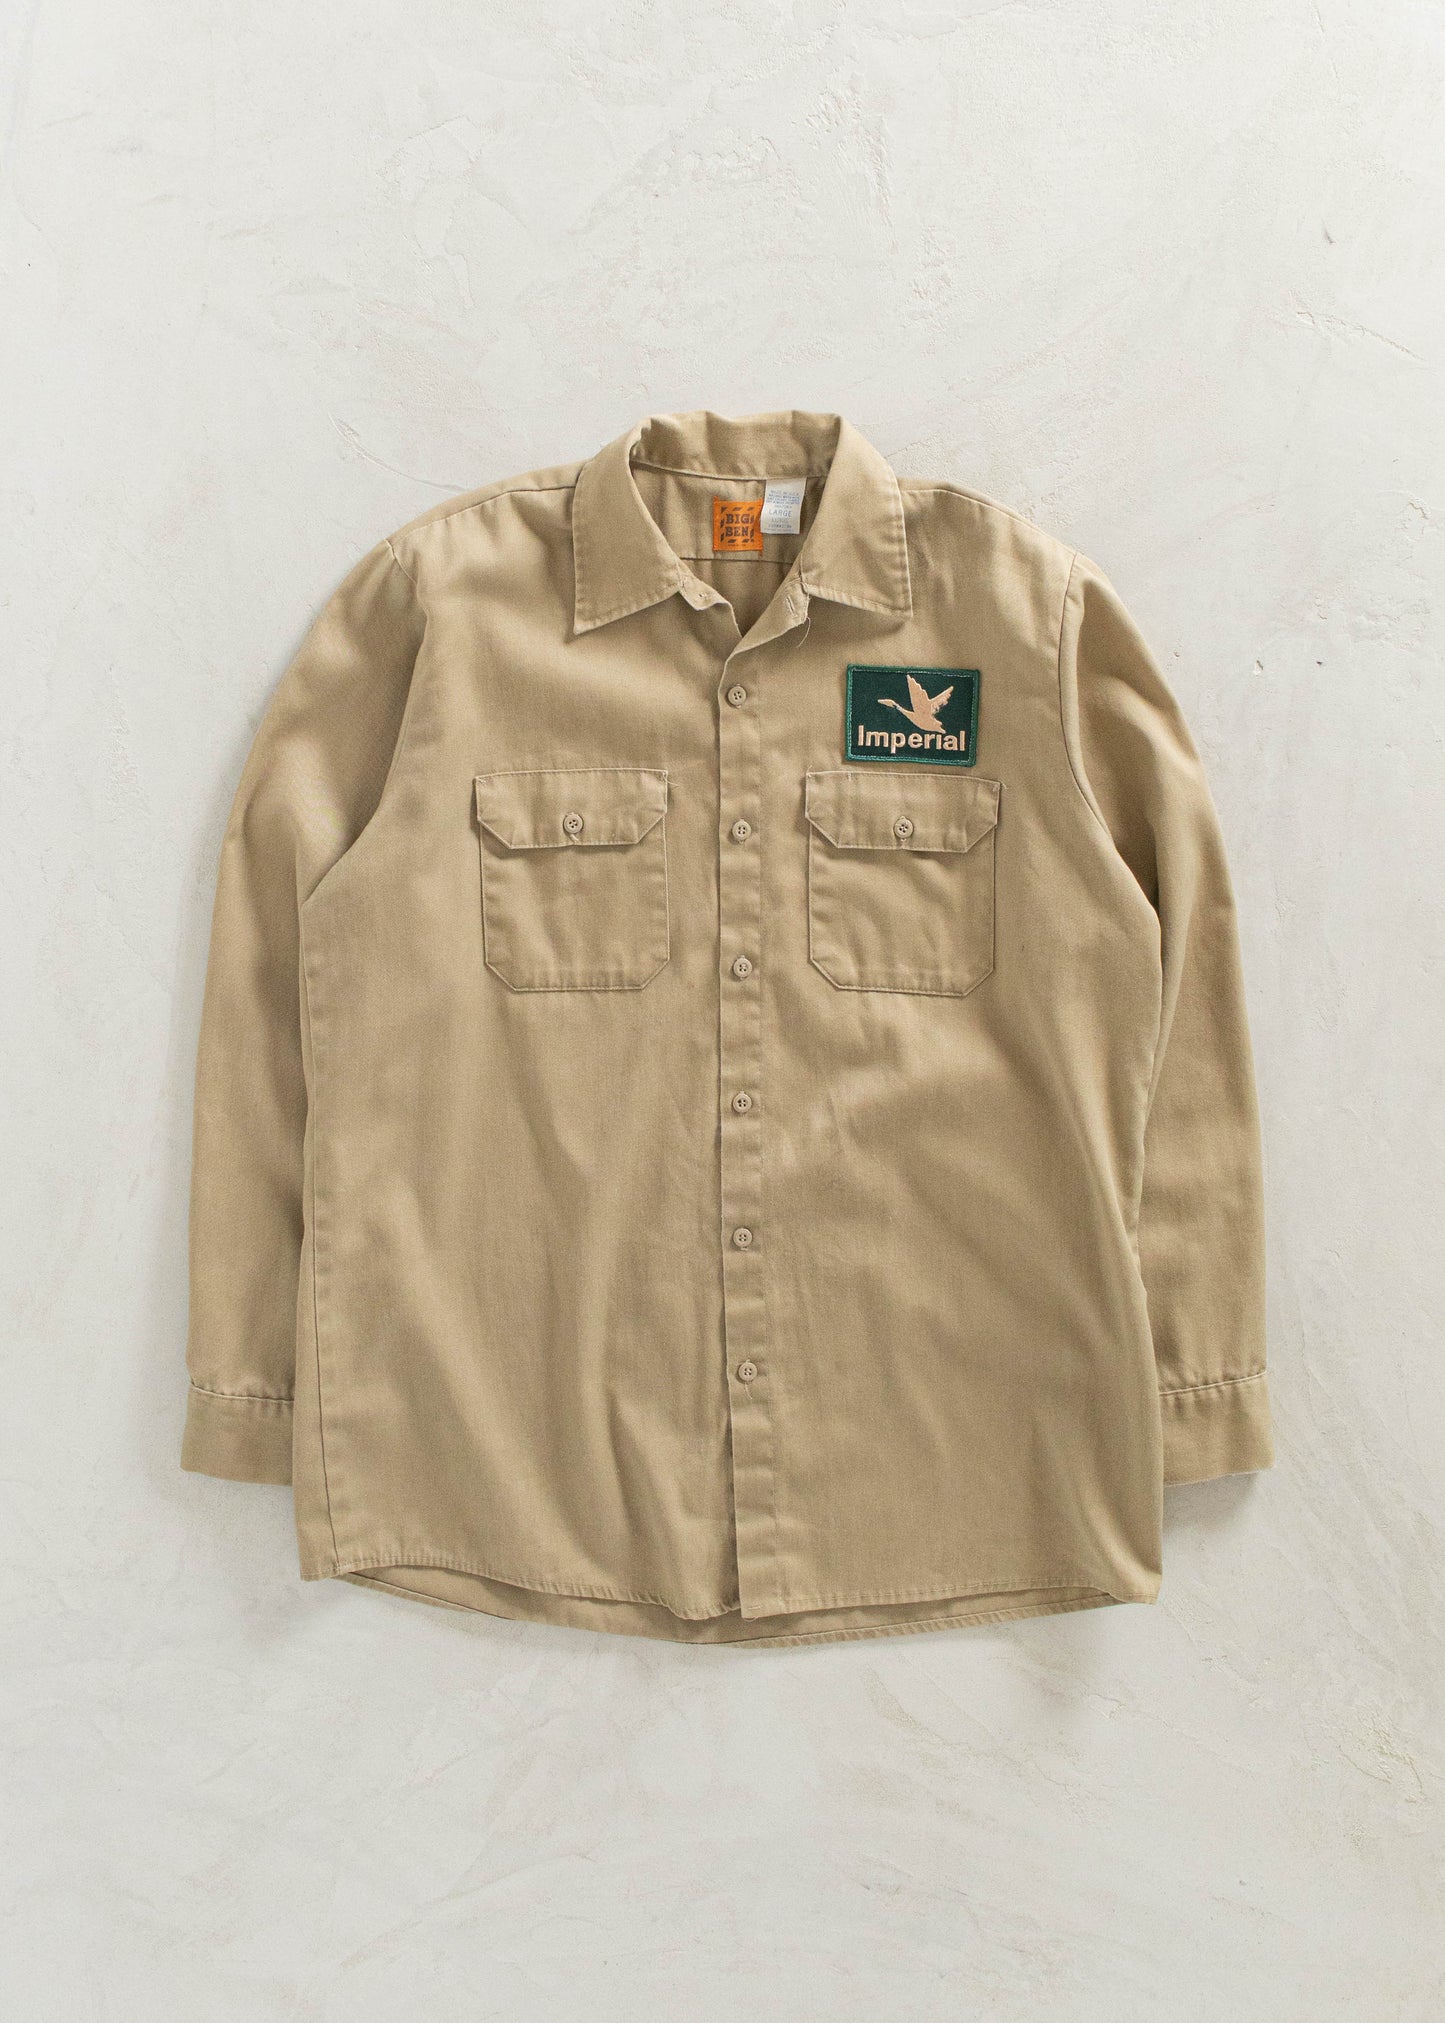 Vintage 1980s Big Ben Workwear Button Up Shirt Size M/L